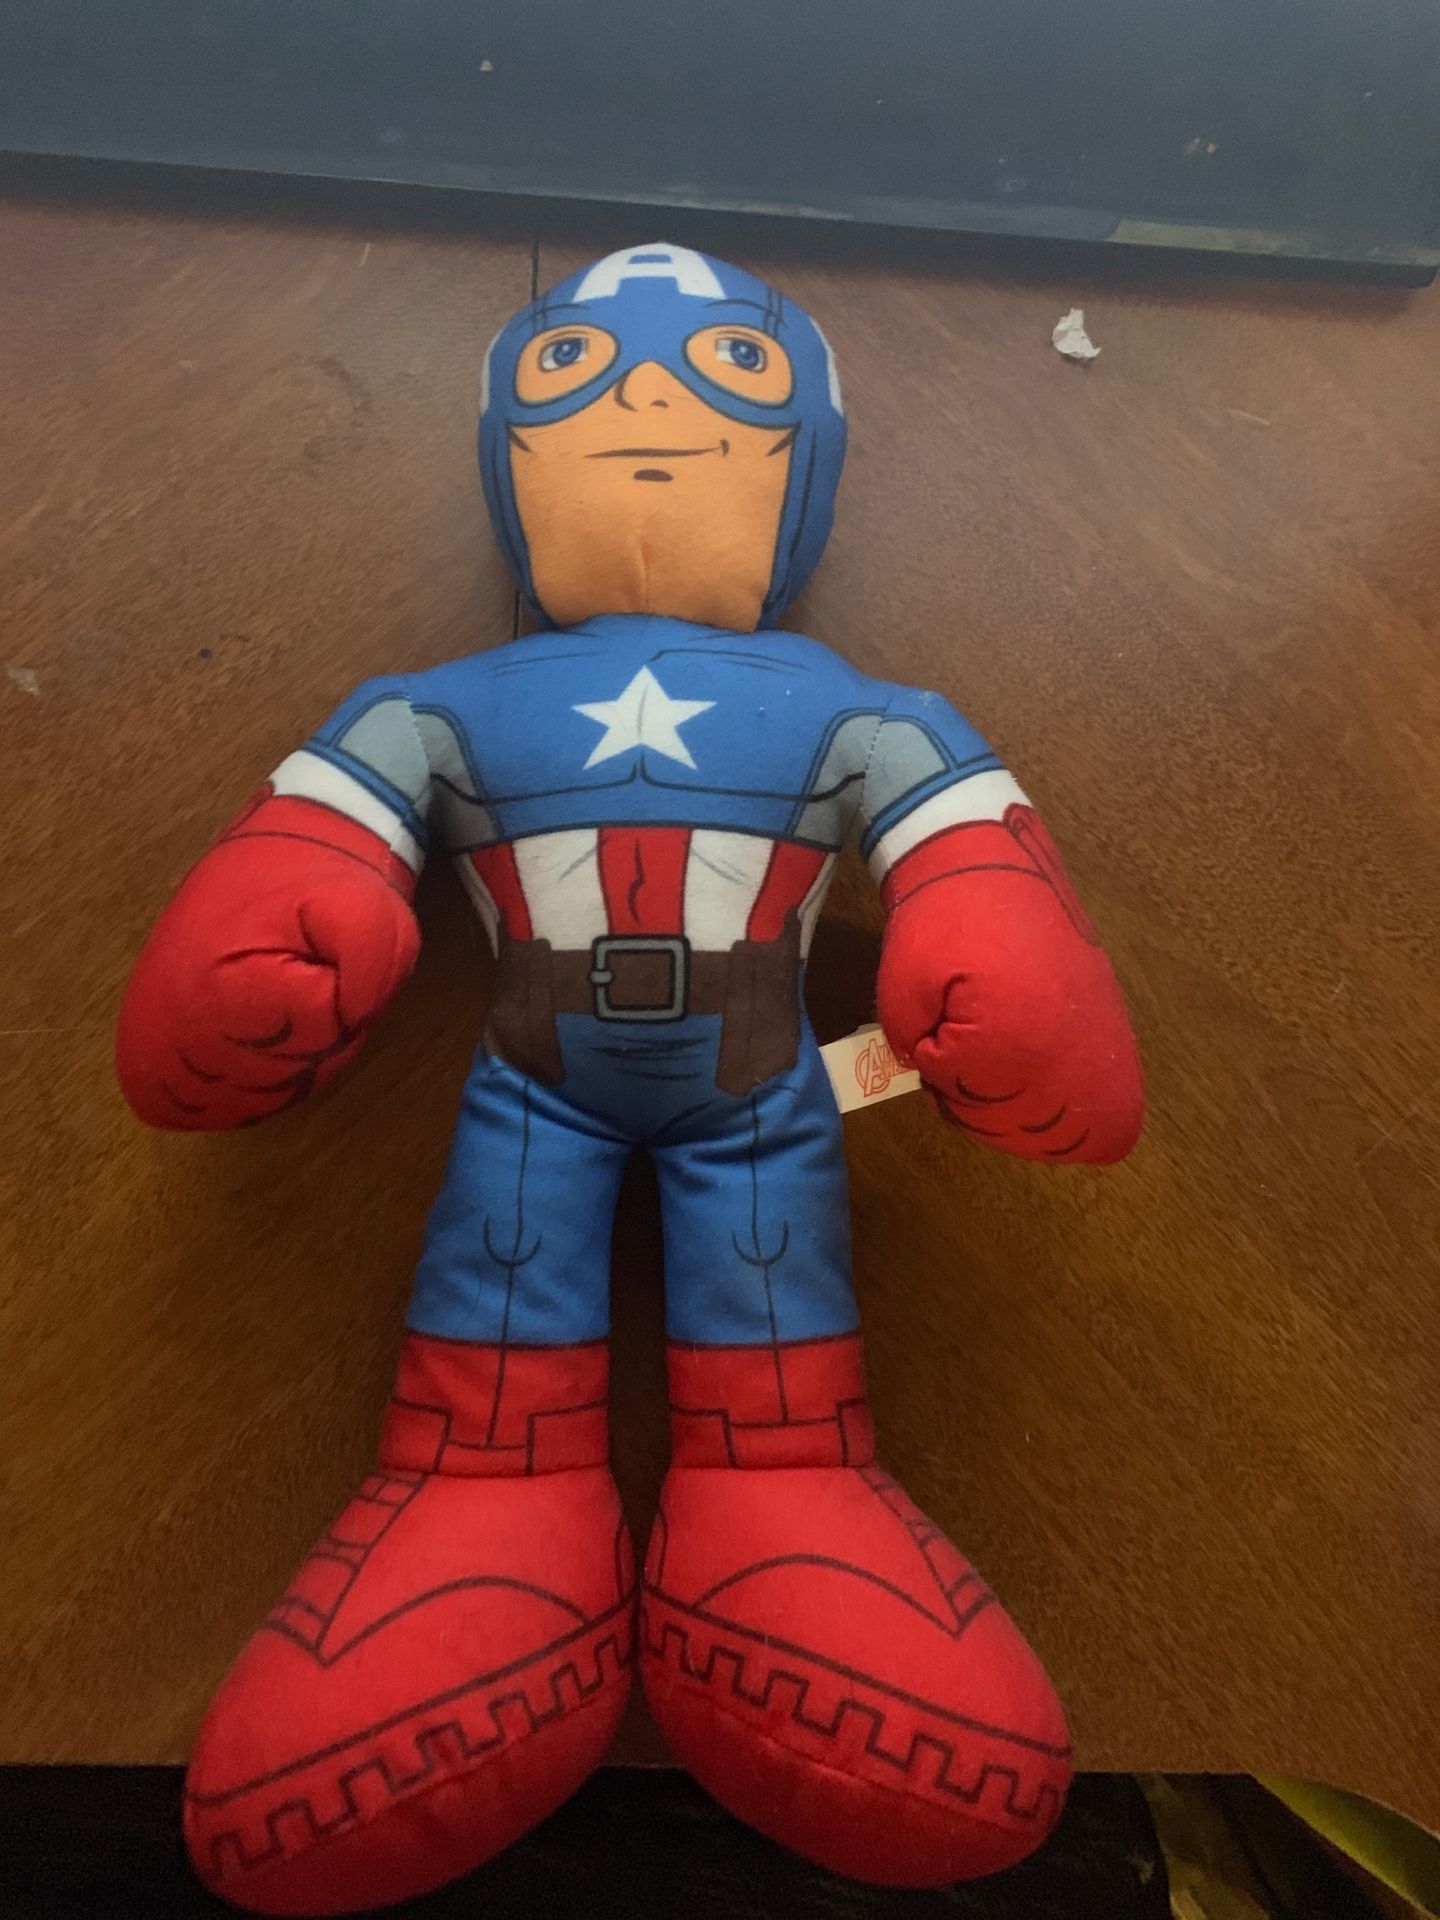 Captain America plush doll